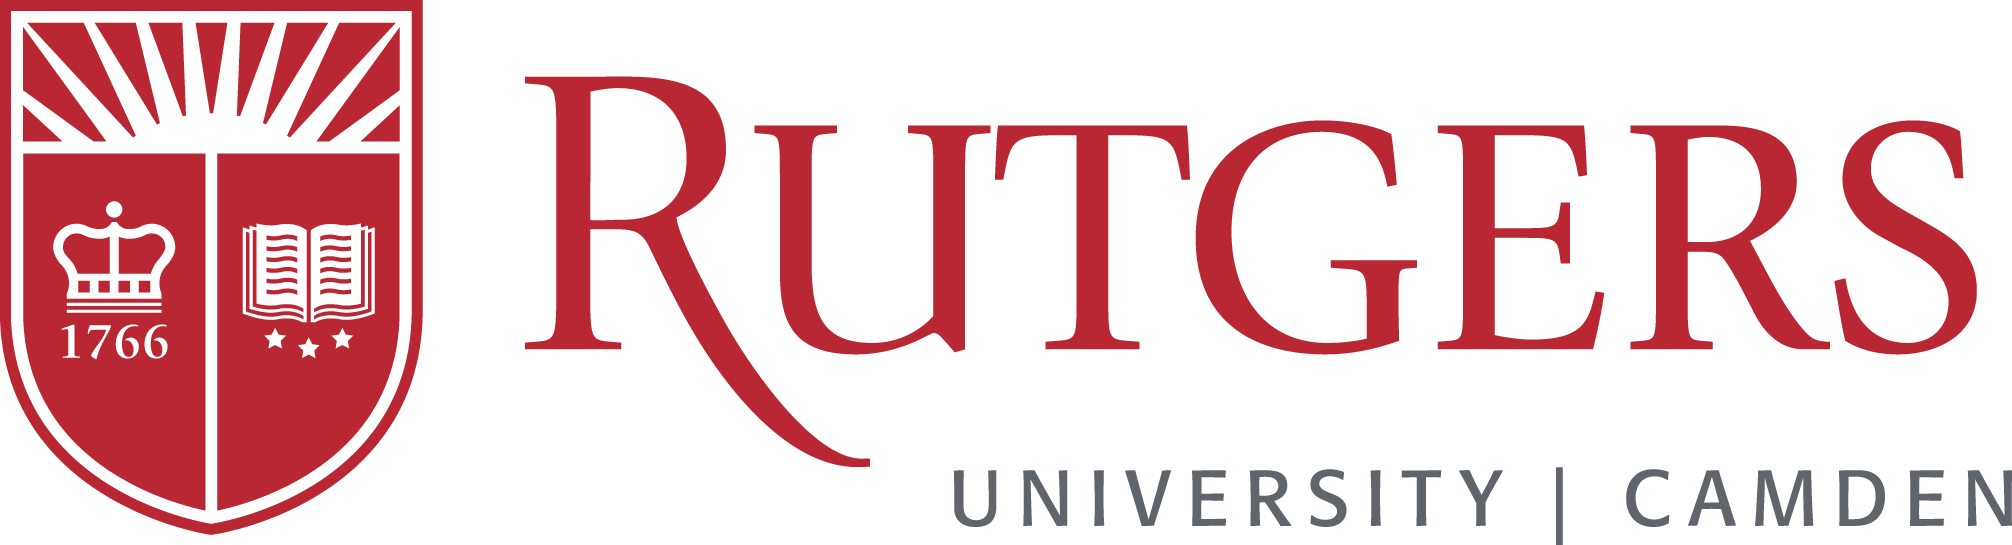 Rutgers University Camden logo